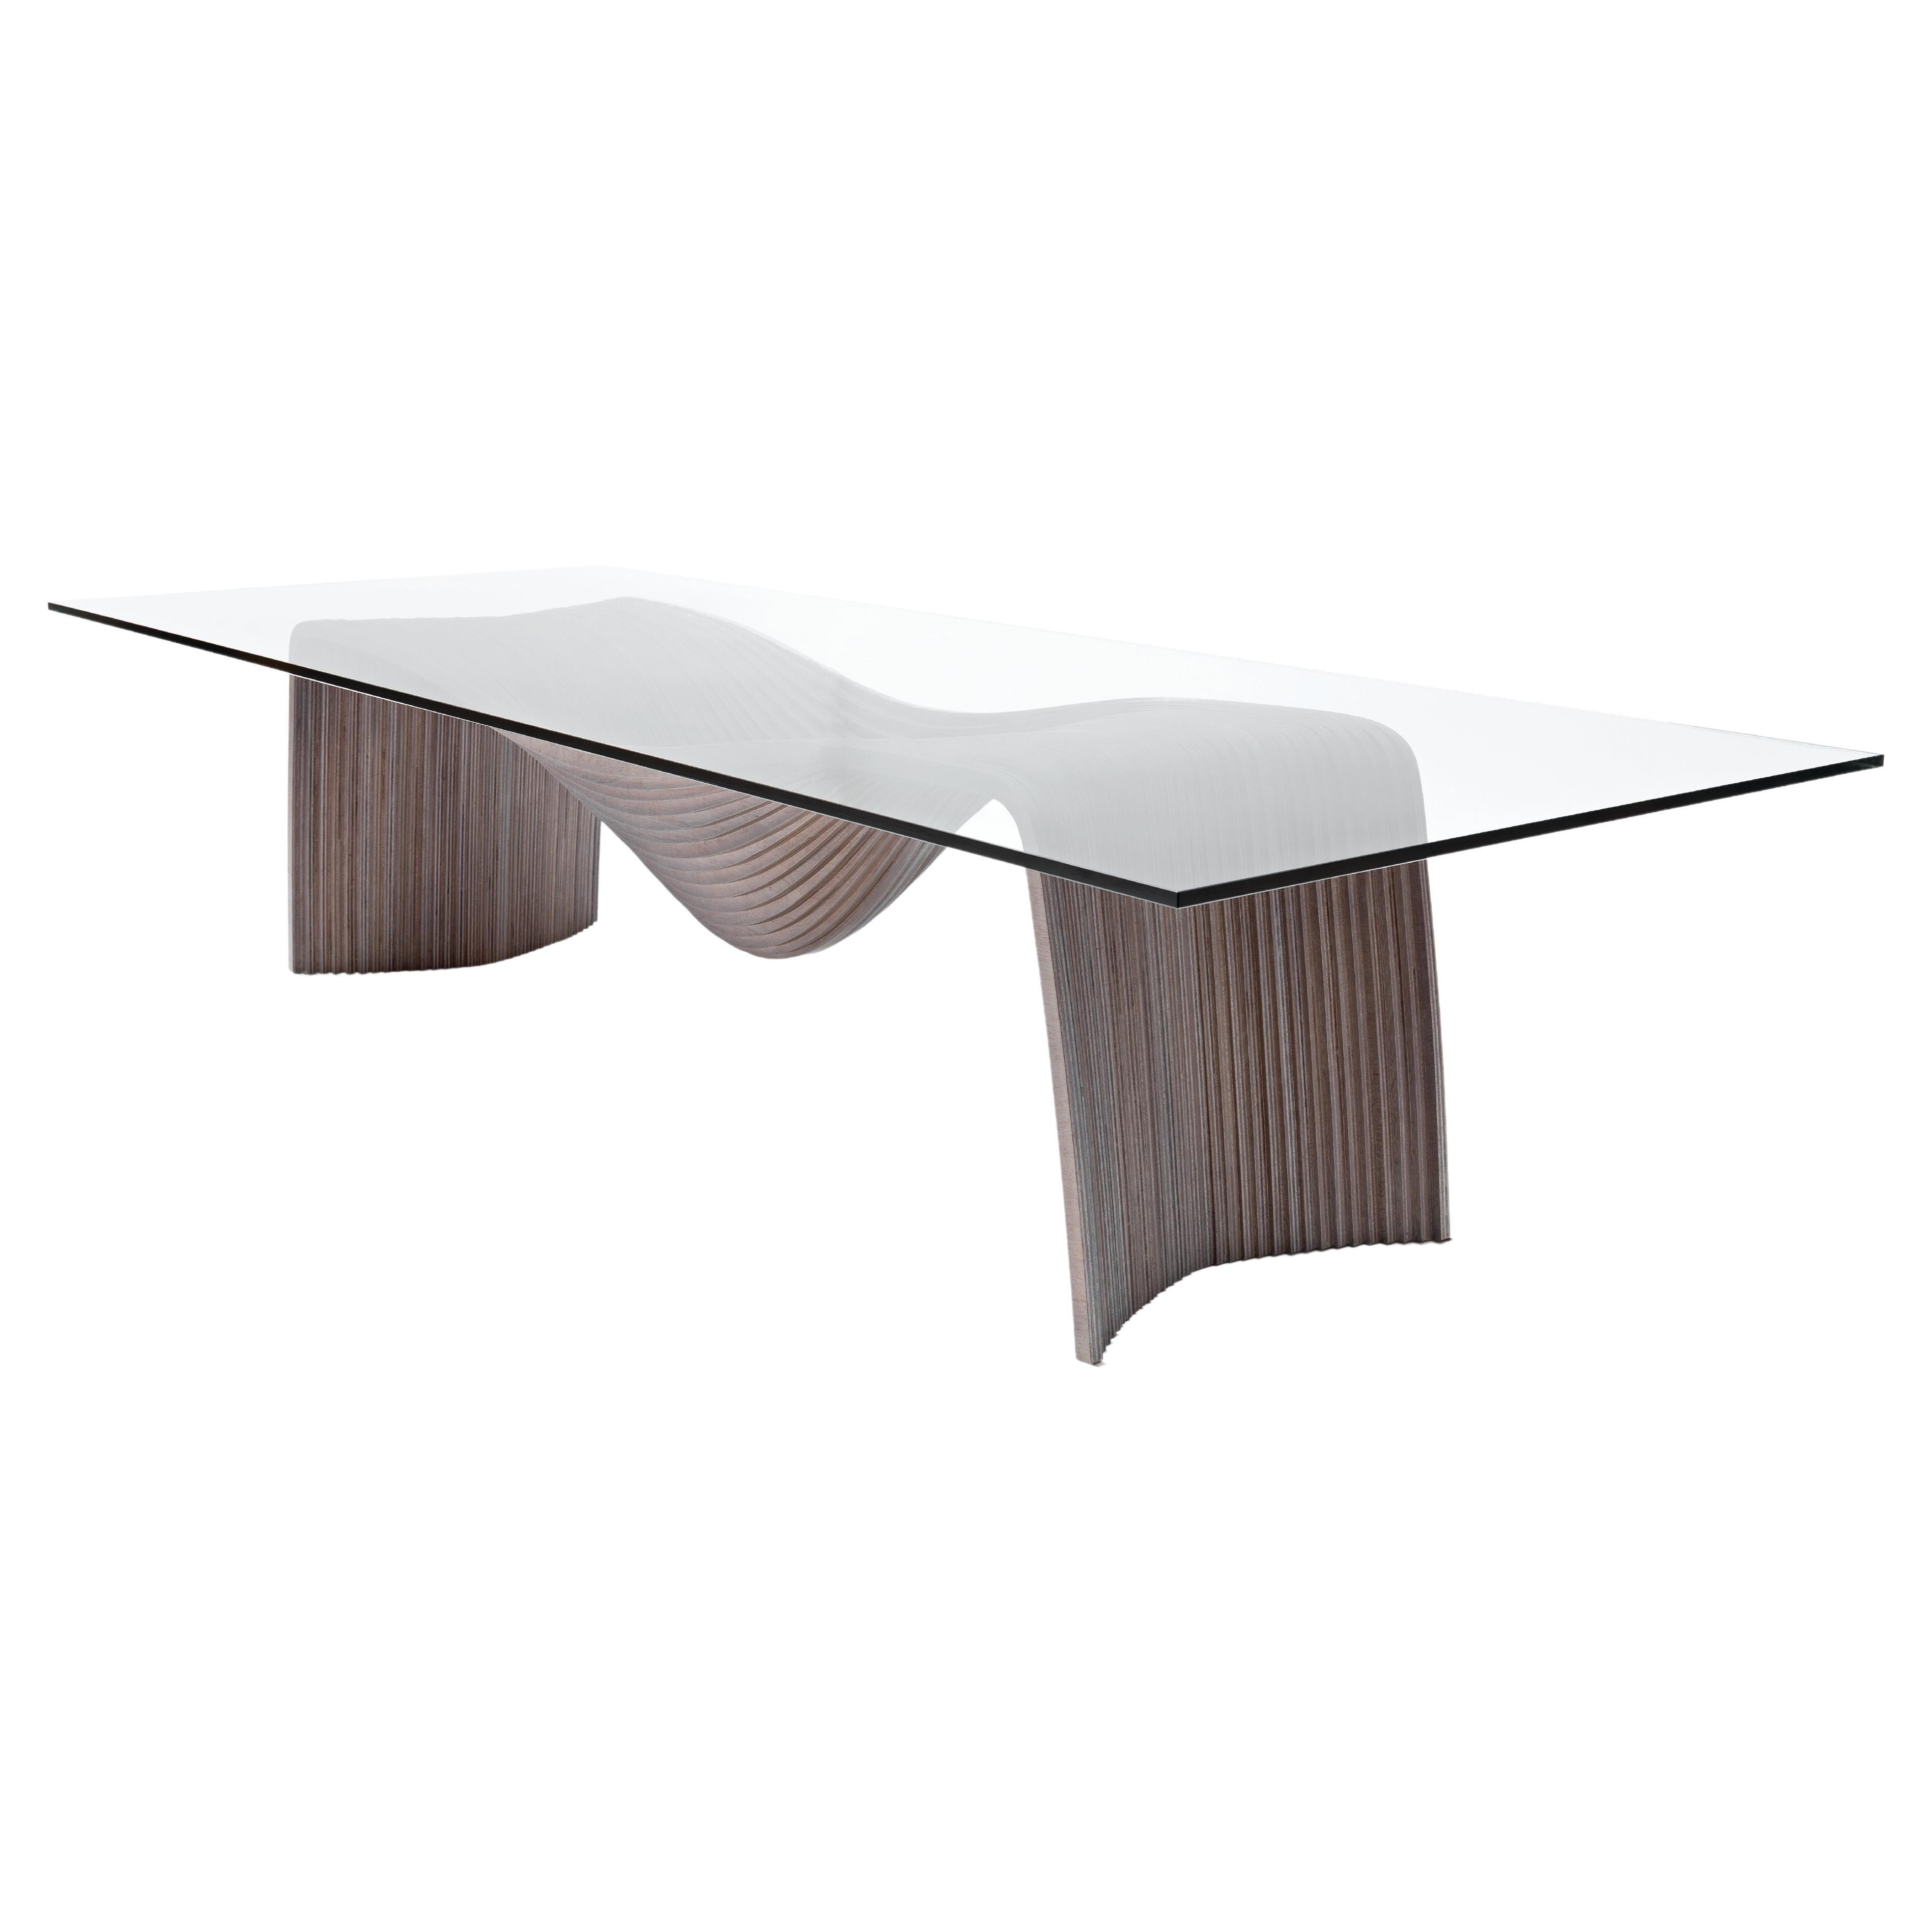 Corozo Table by Piegatto, a Sculptural Contemporary Table